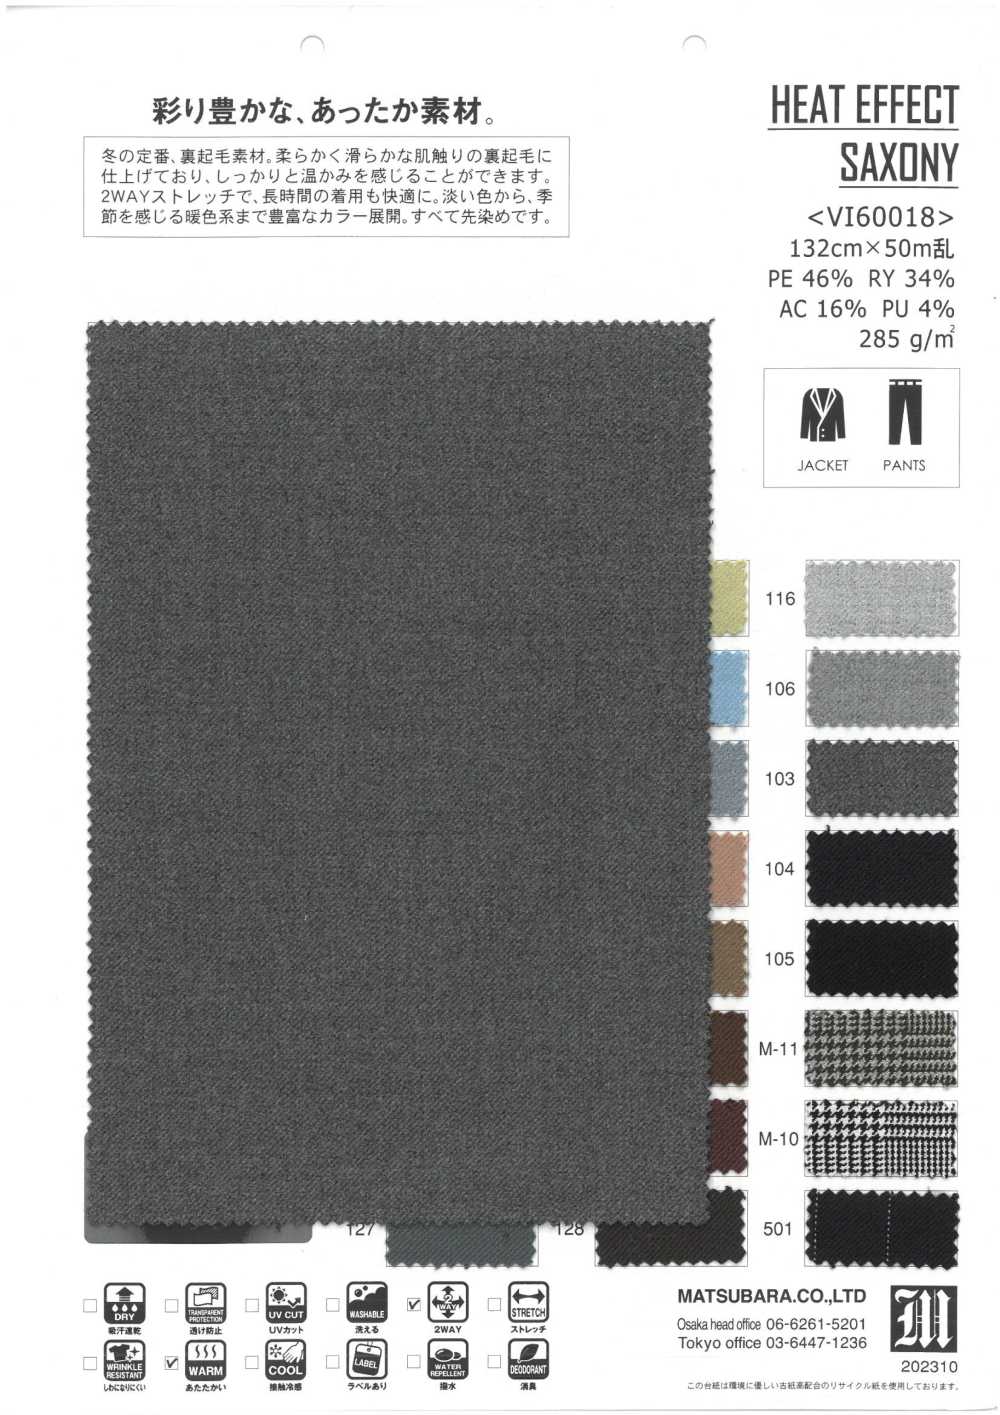 VI60018 EFECTO CALOR SAJONIA[Fabrica Textil] Matsubara